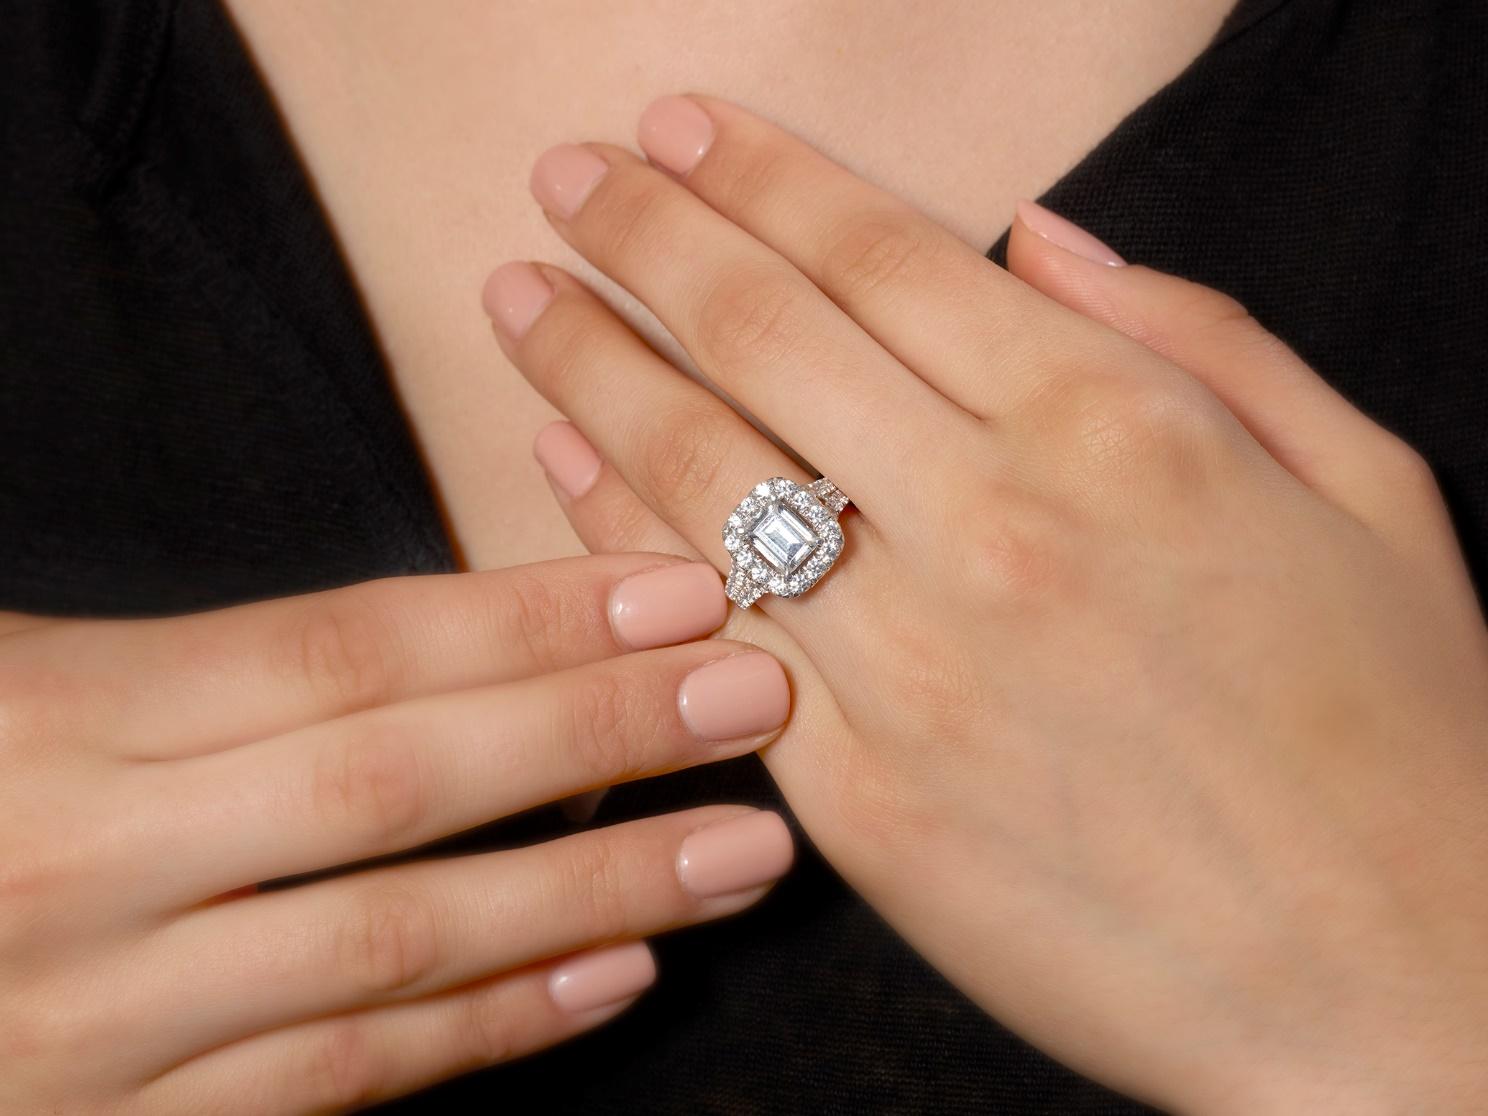 7 Timeless Vintage Engagement Rings - Engagement Rings - Frank Jewelers Blog